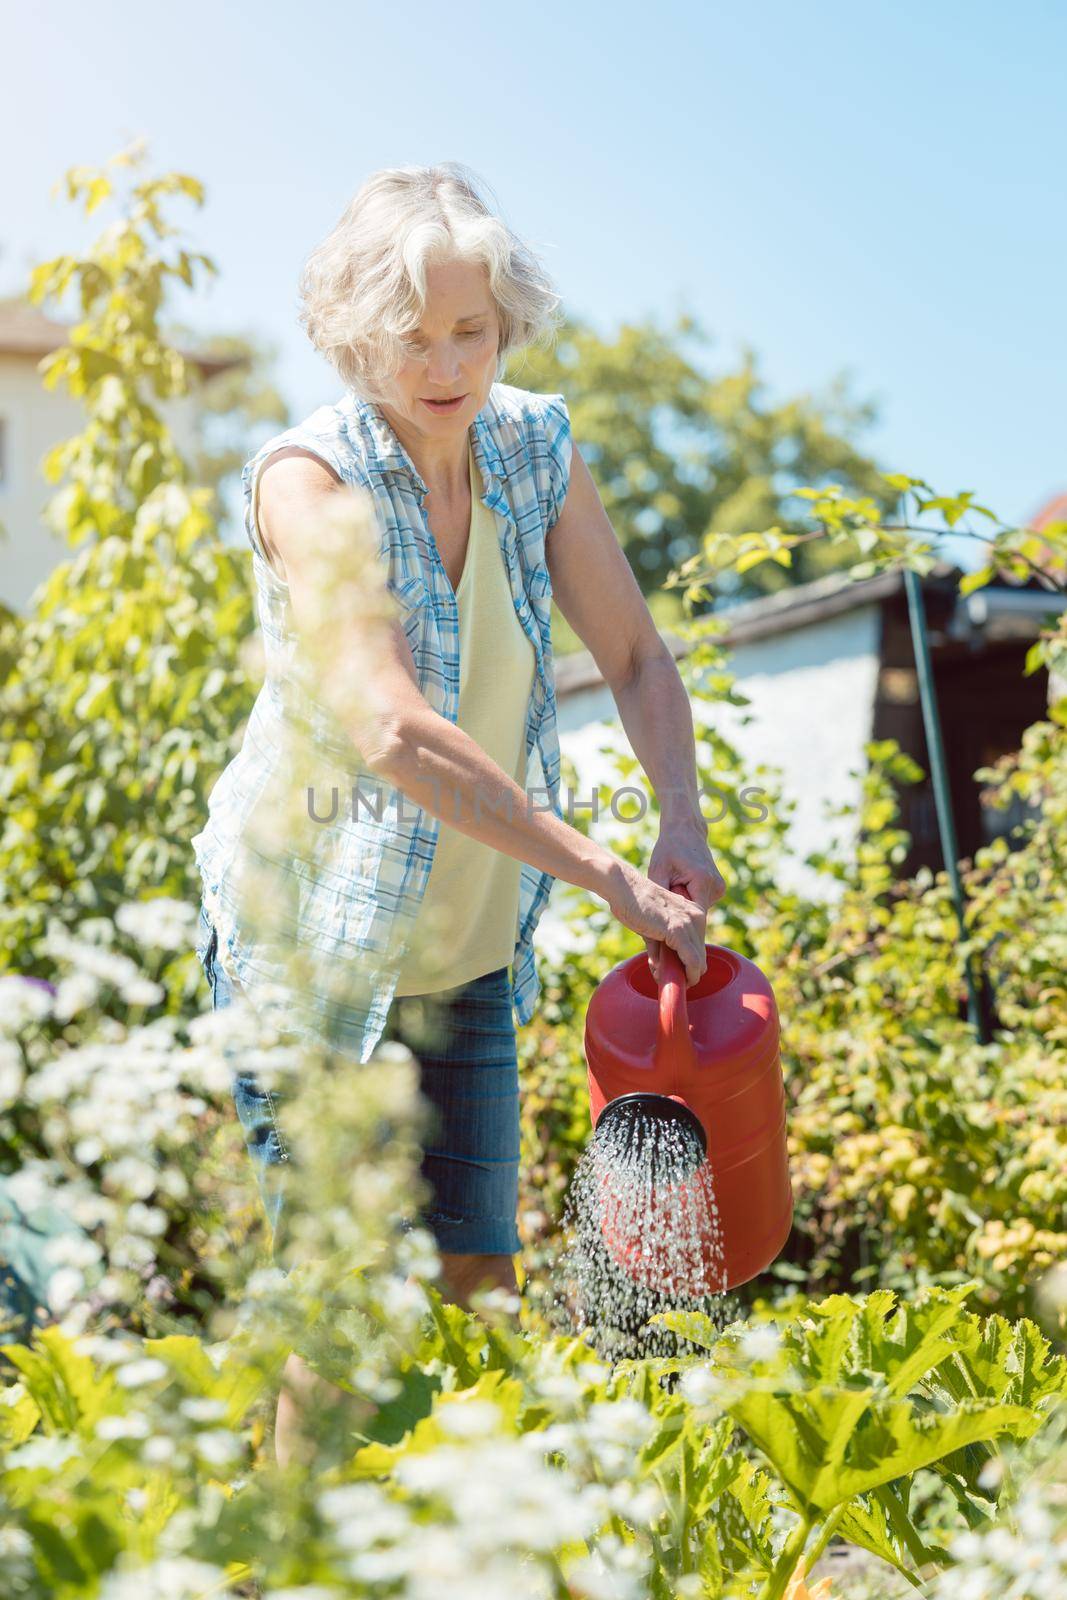 Bestager woman watering the plants in her garden